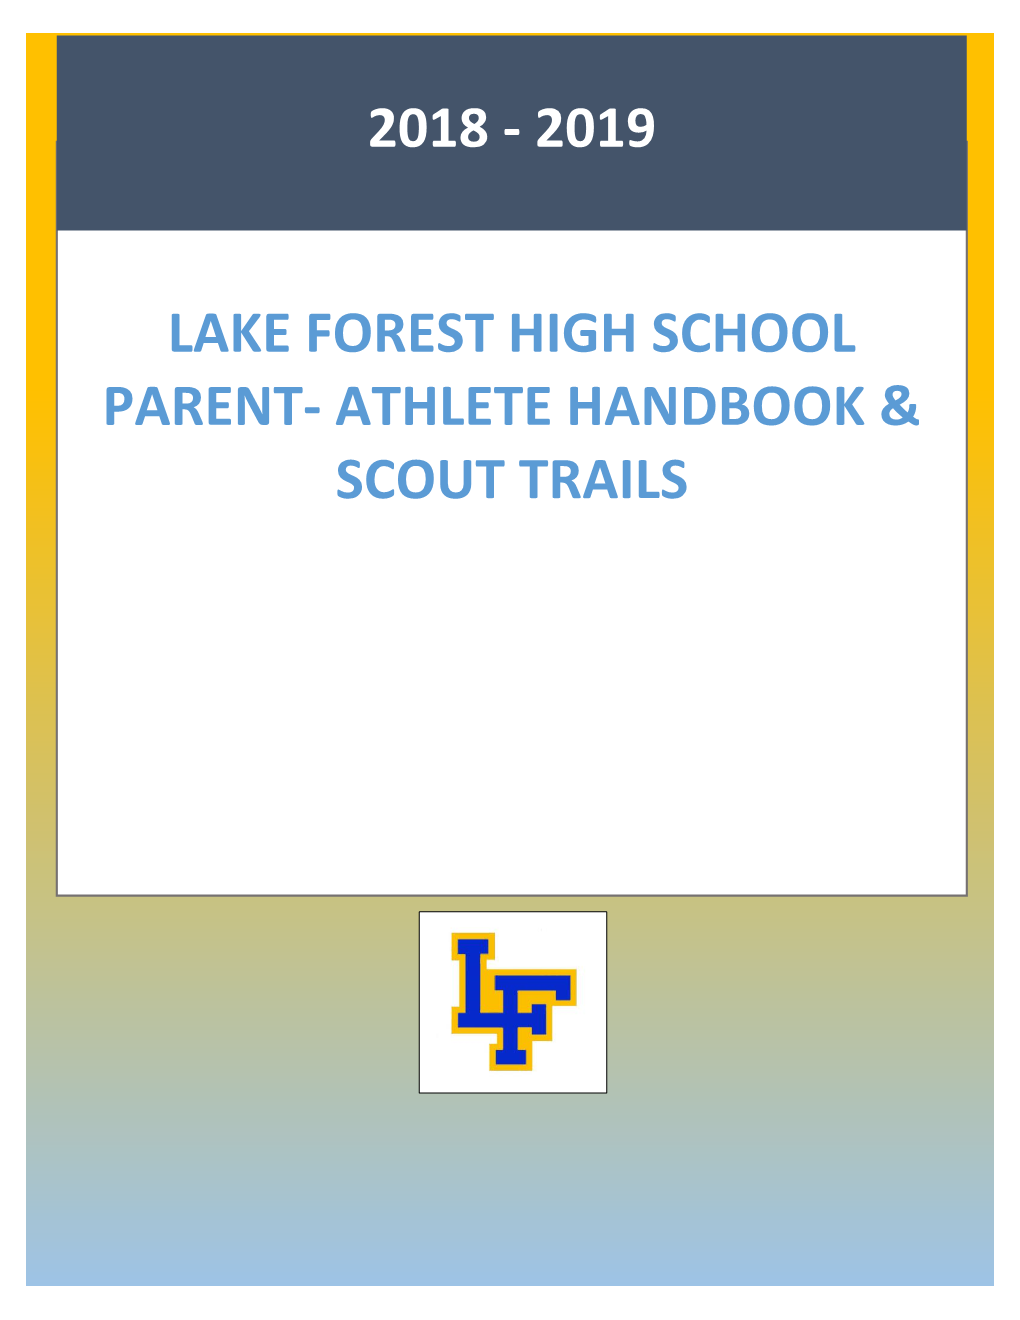 Lake Forest High School Parent- Athlete Handbook & Scout Trails